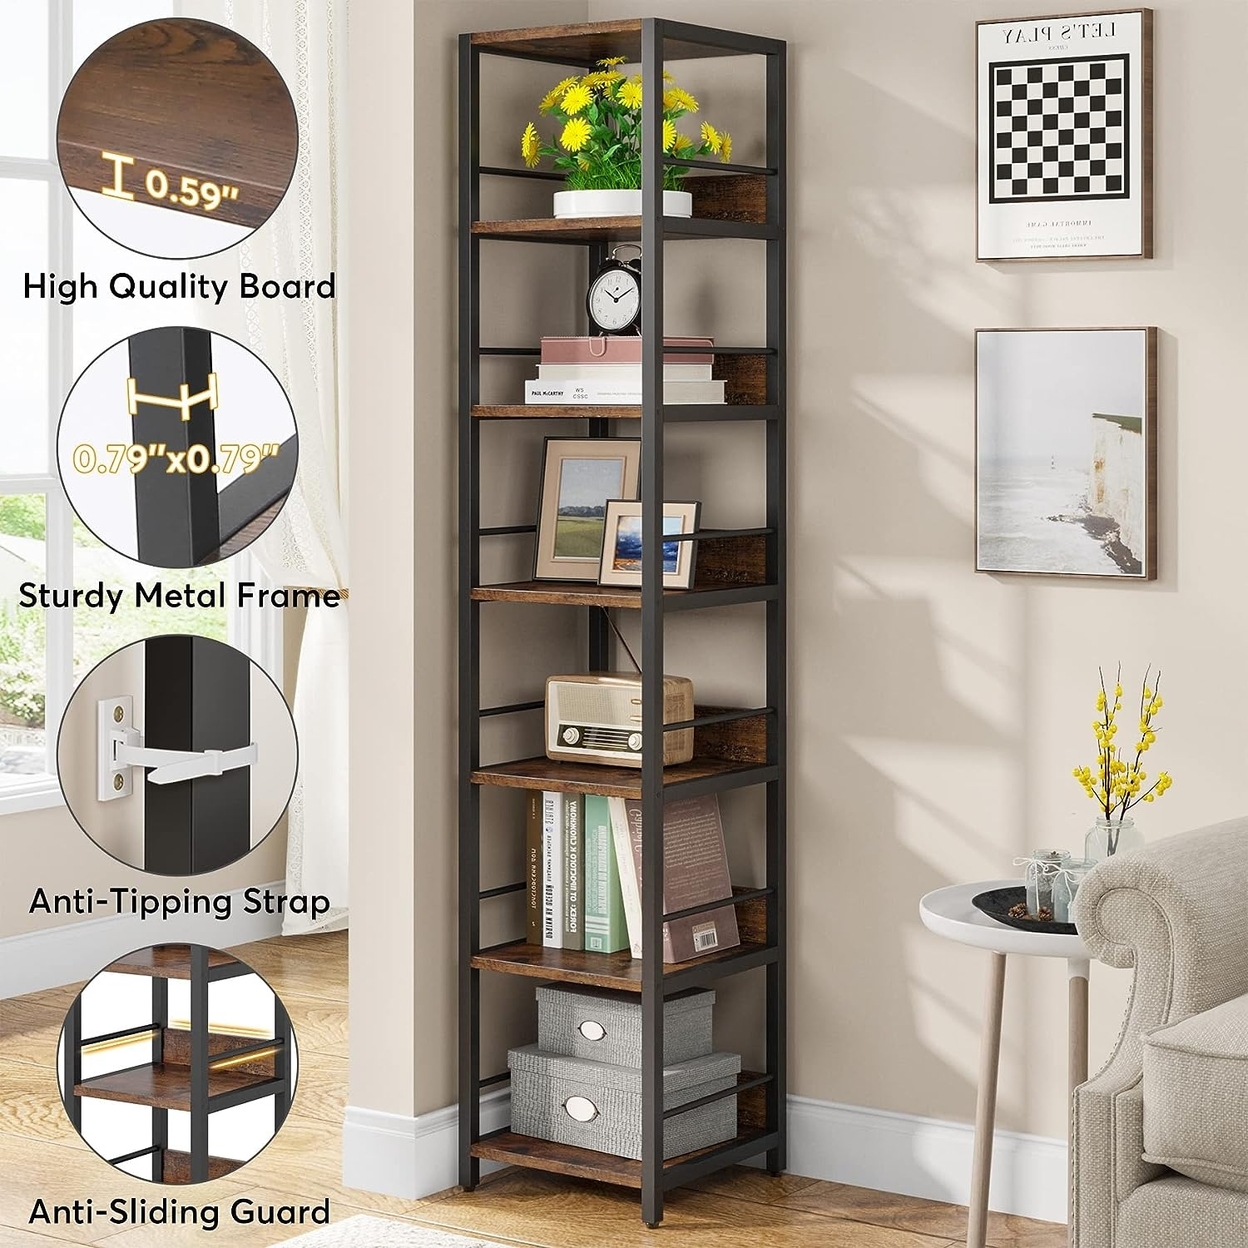 Tribesigns 6-Tier Corner Shelf, 75 Inch Tall Narrow Bookshelf Storage Rack, Etagere Shelves Display Stand For Small Spaces